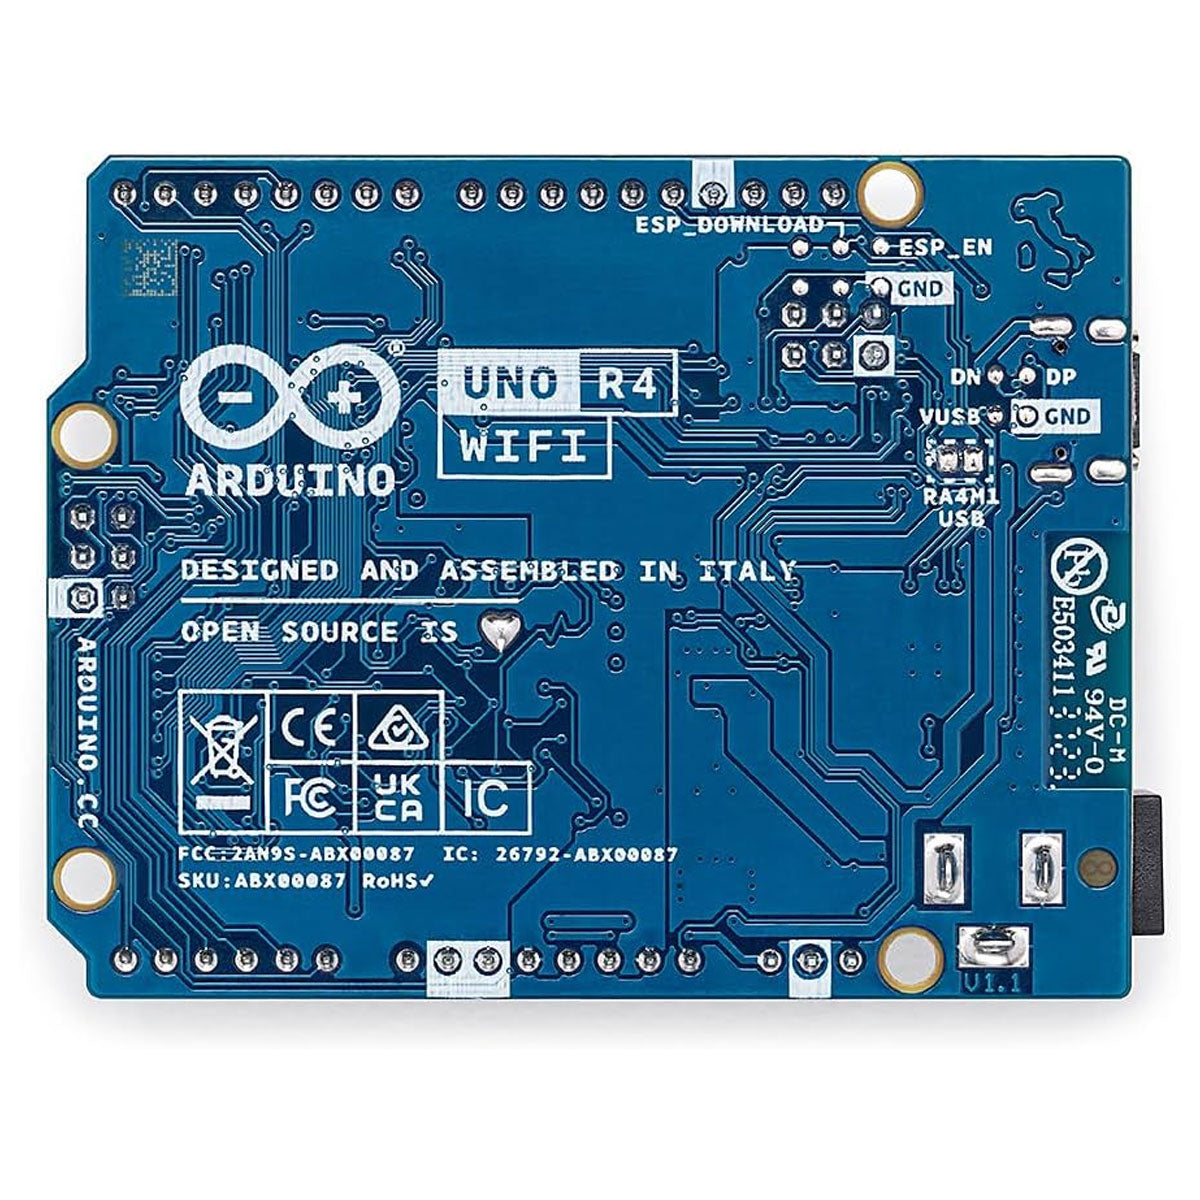 Arduino UNO R4 WiFi / ESP32-S3 / Bluetooth / 12x8 Matrix / USB-C